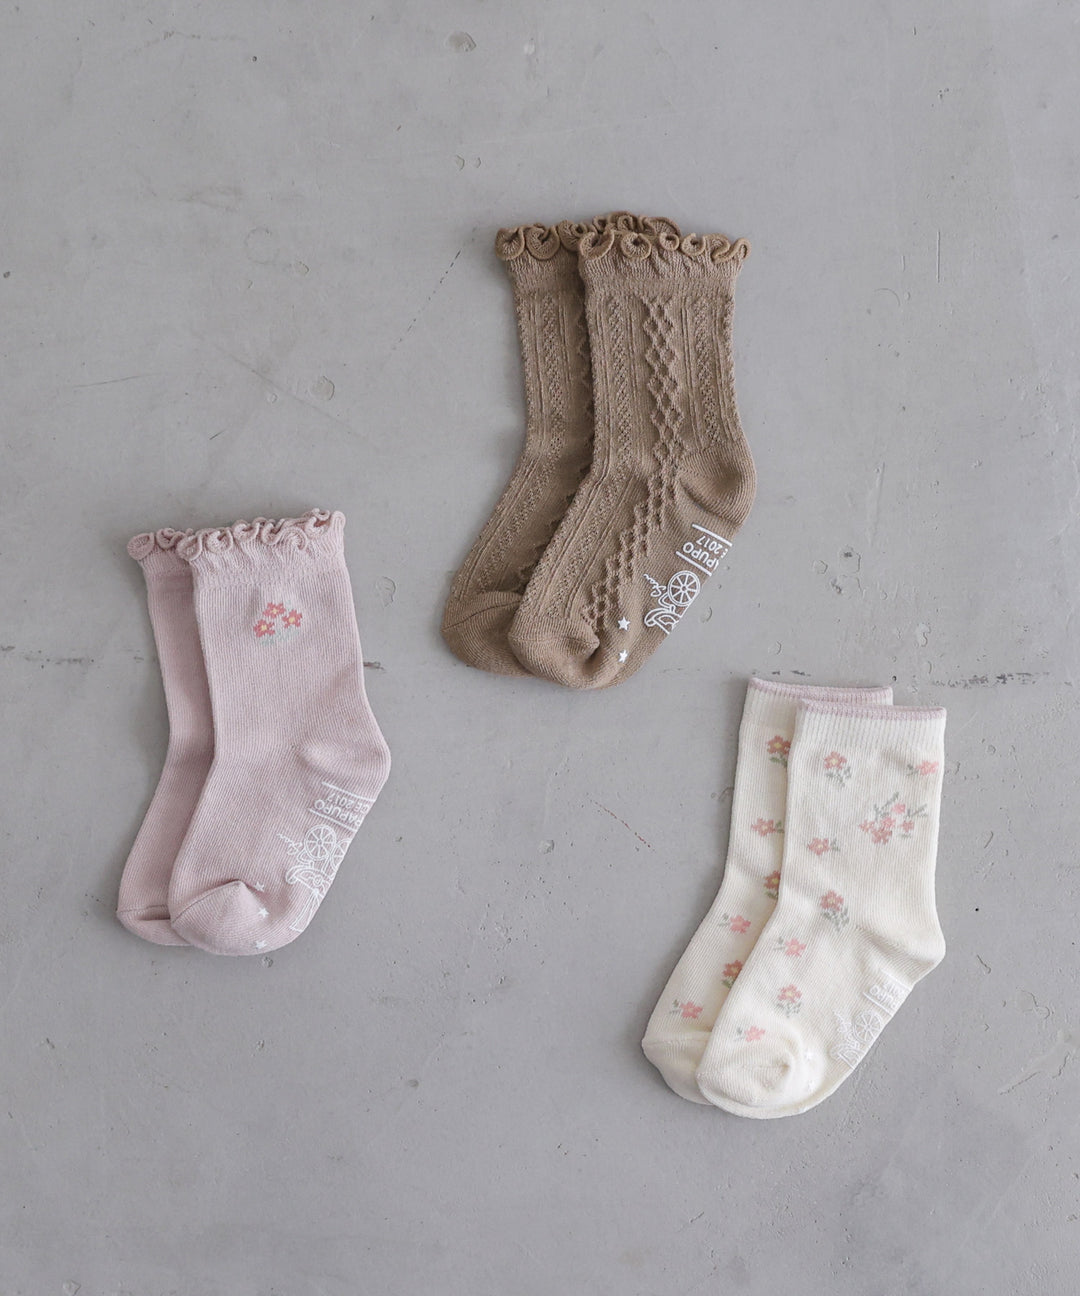 Babies & kids crew socks (set of 3 pairs)